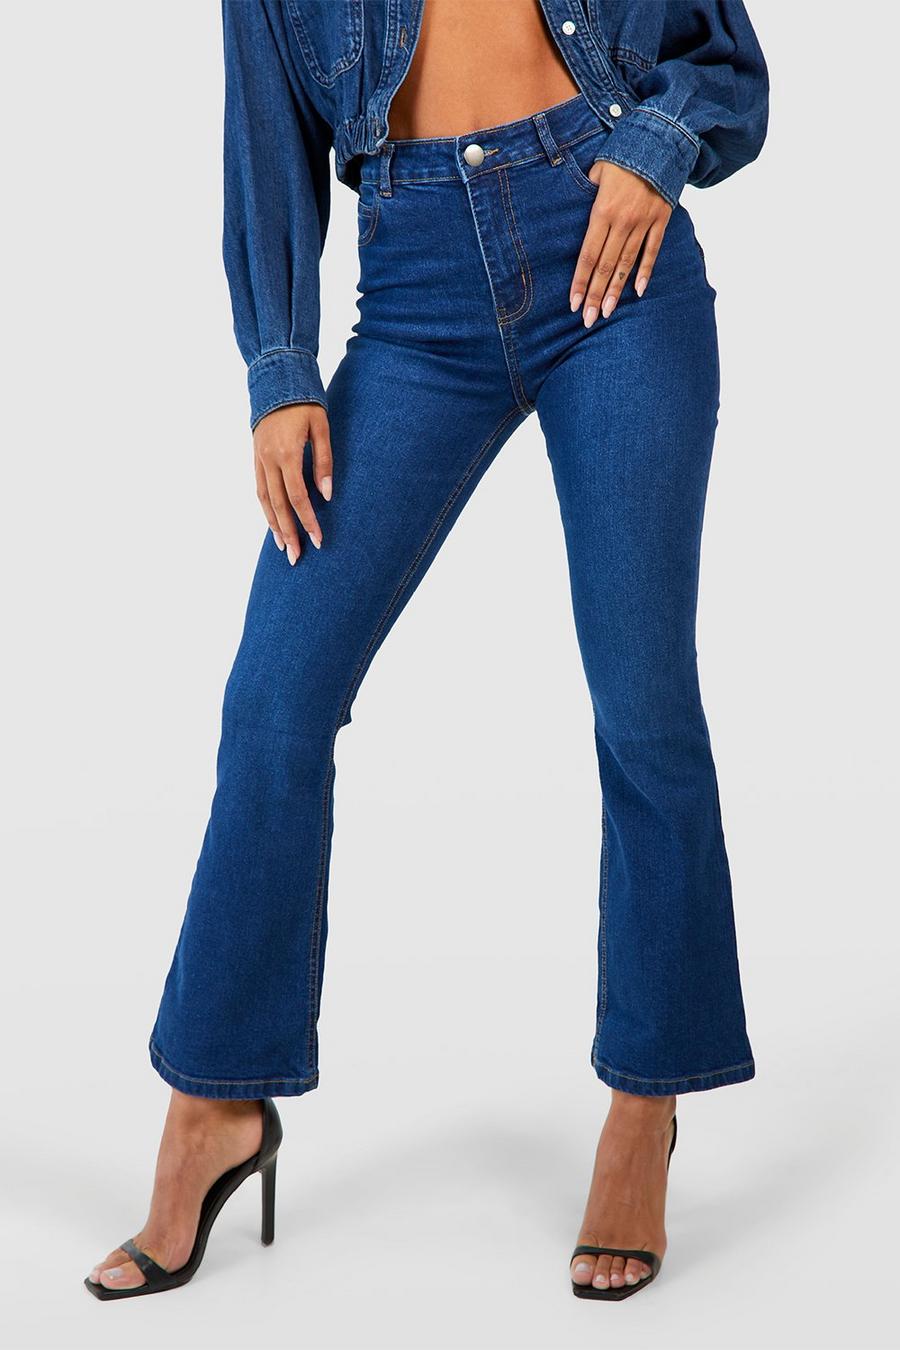 Indigo blue Flared Booty Boost Stretch Jeans